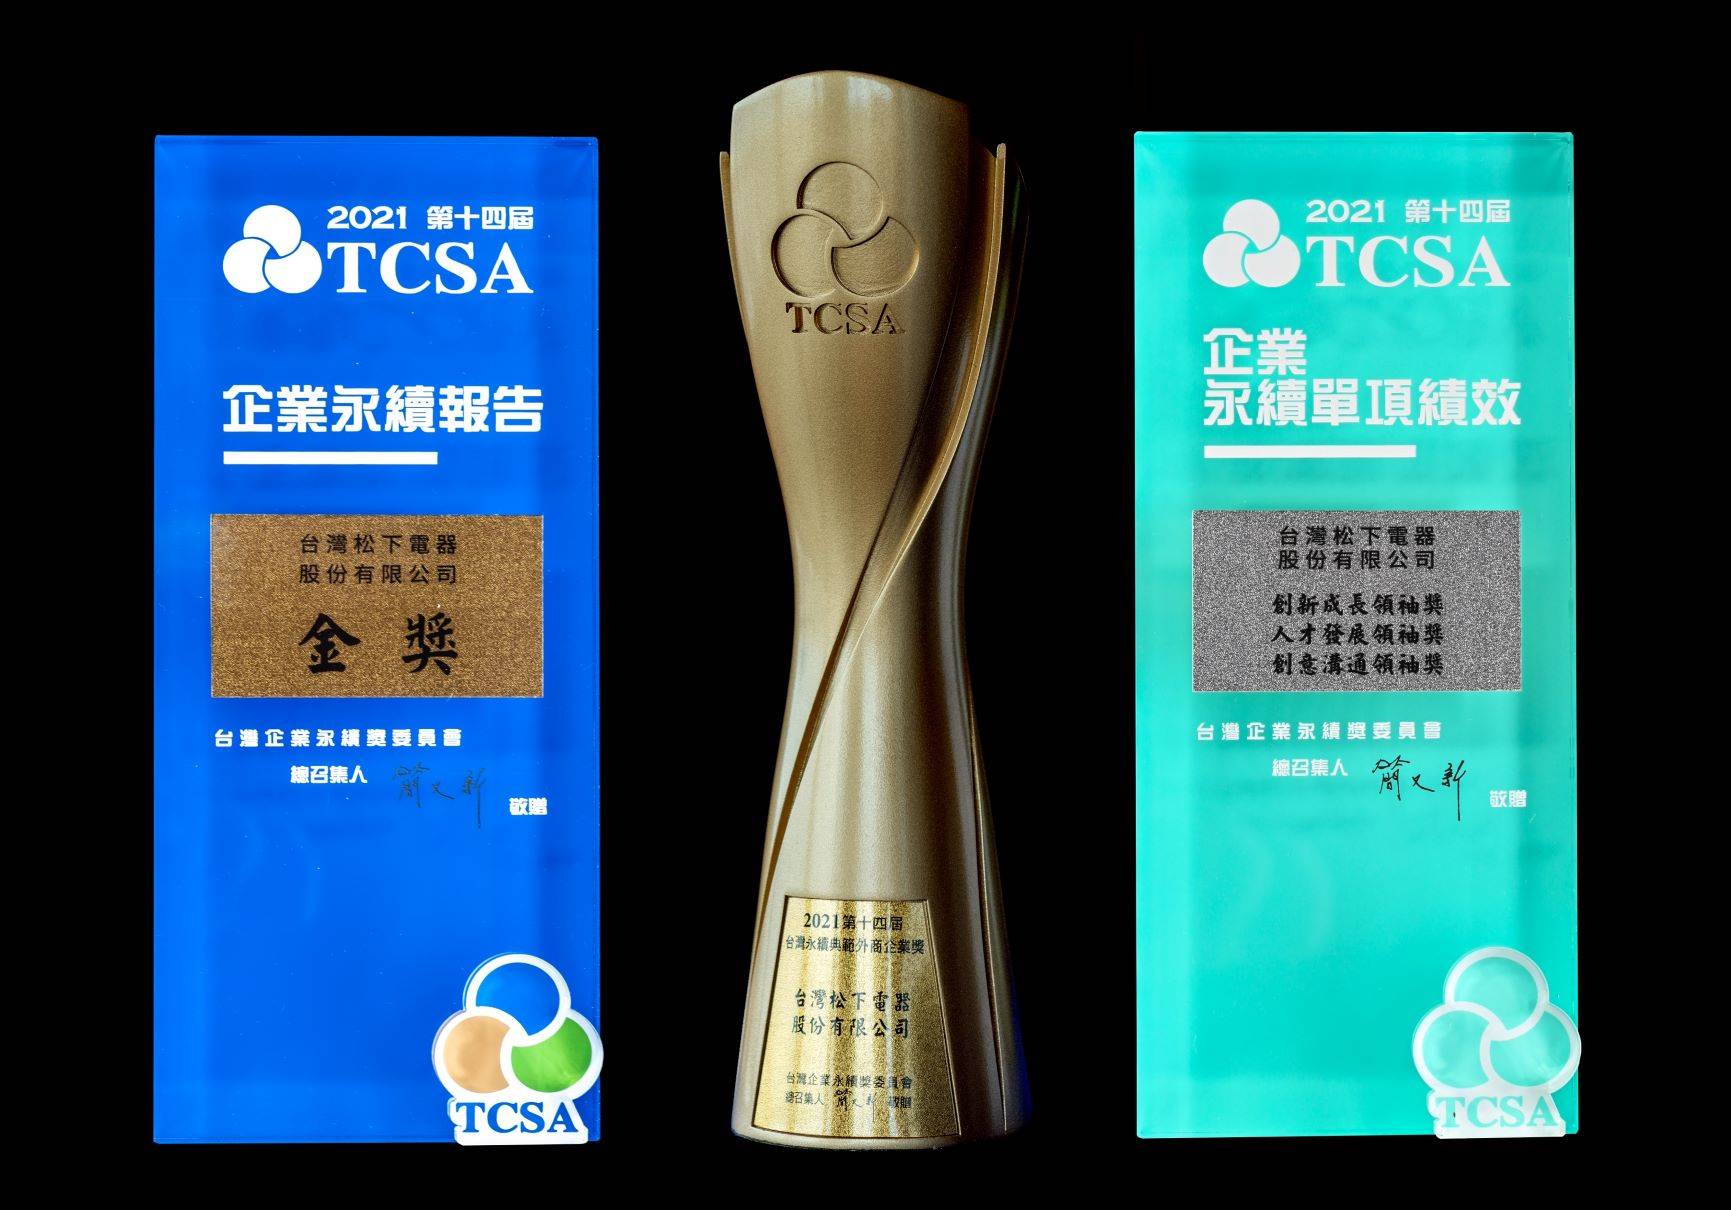 Panasonic連續四年榮獲台灣企業永續典範獎